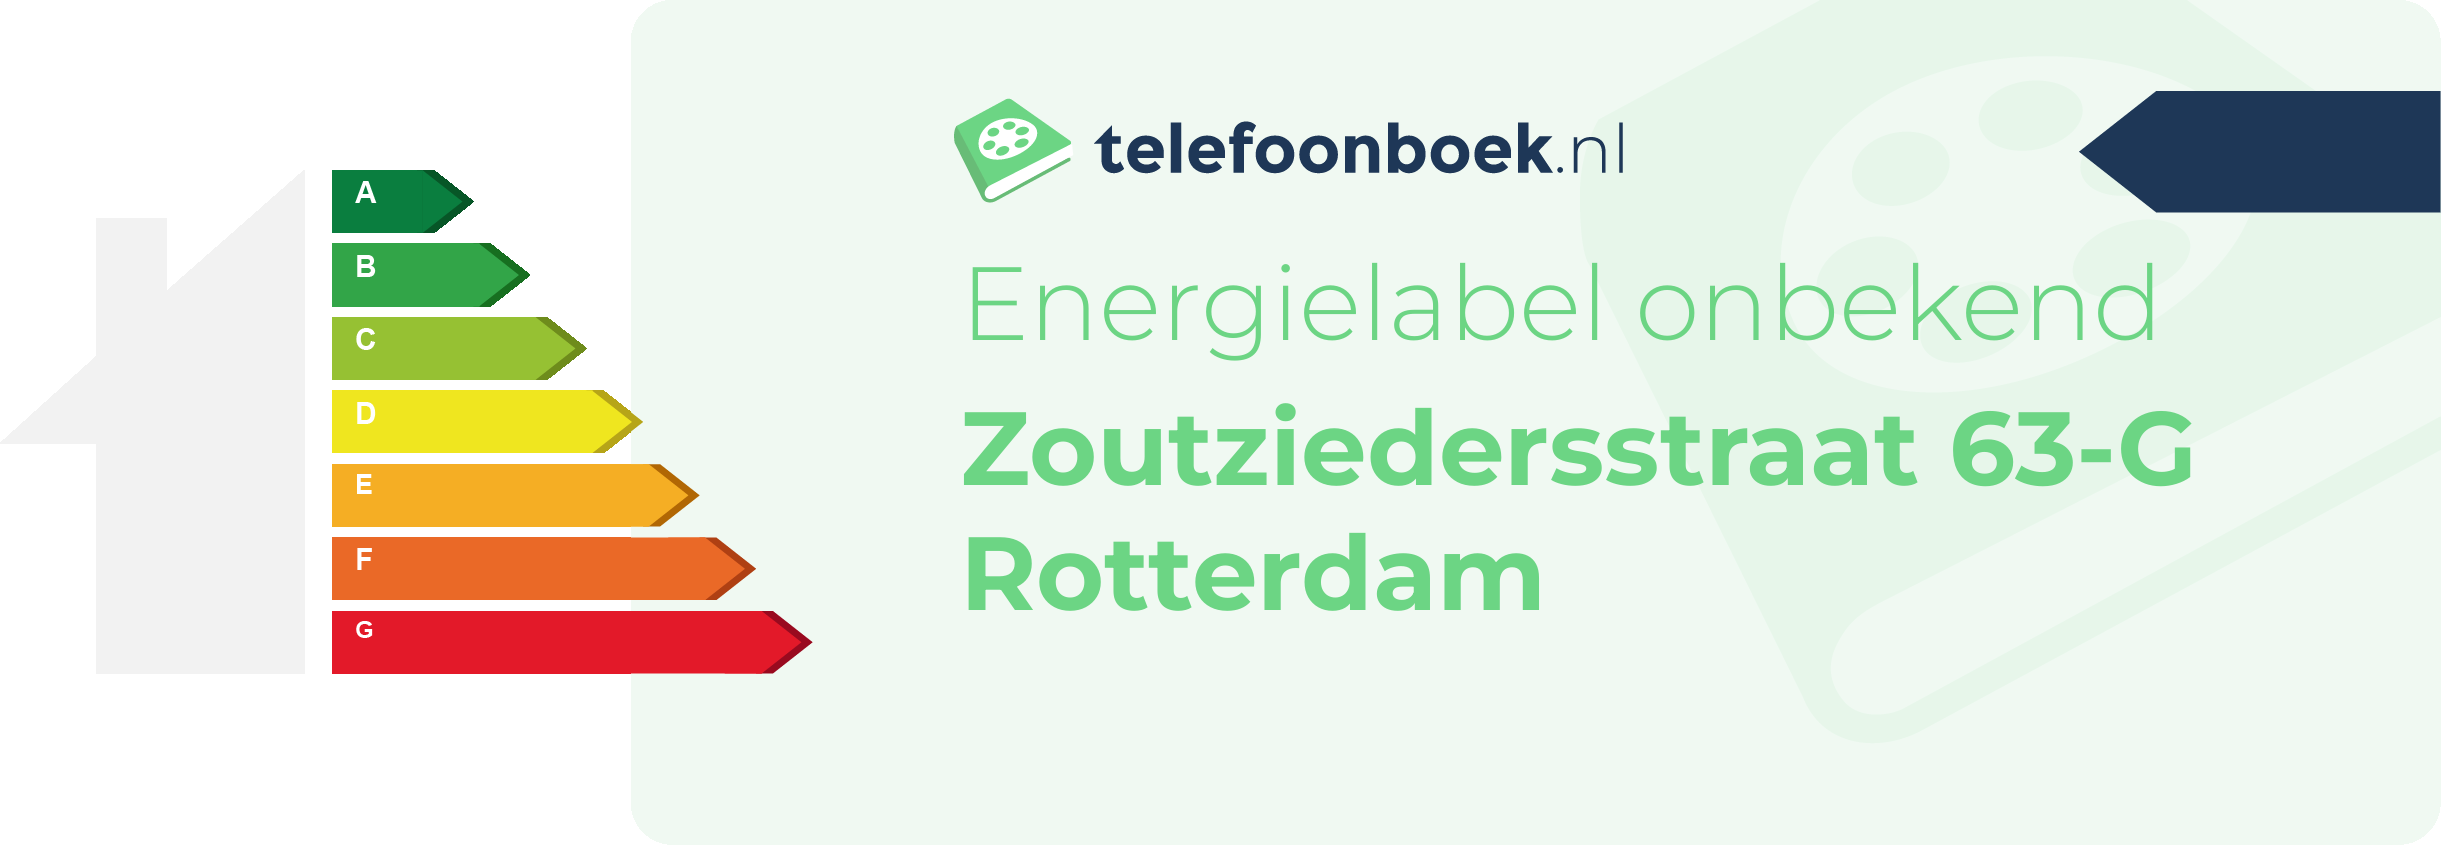 Energielabel Zoutziedersstraat 63-G Rotterdam